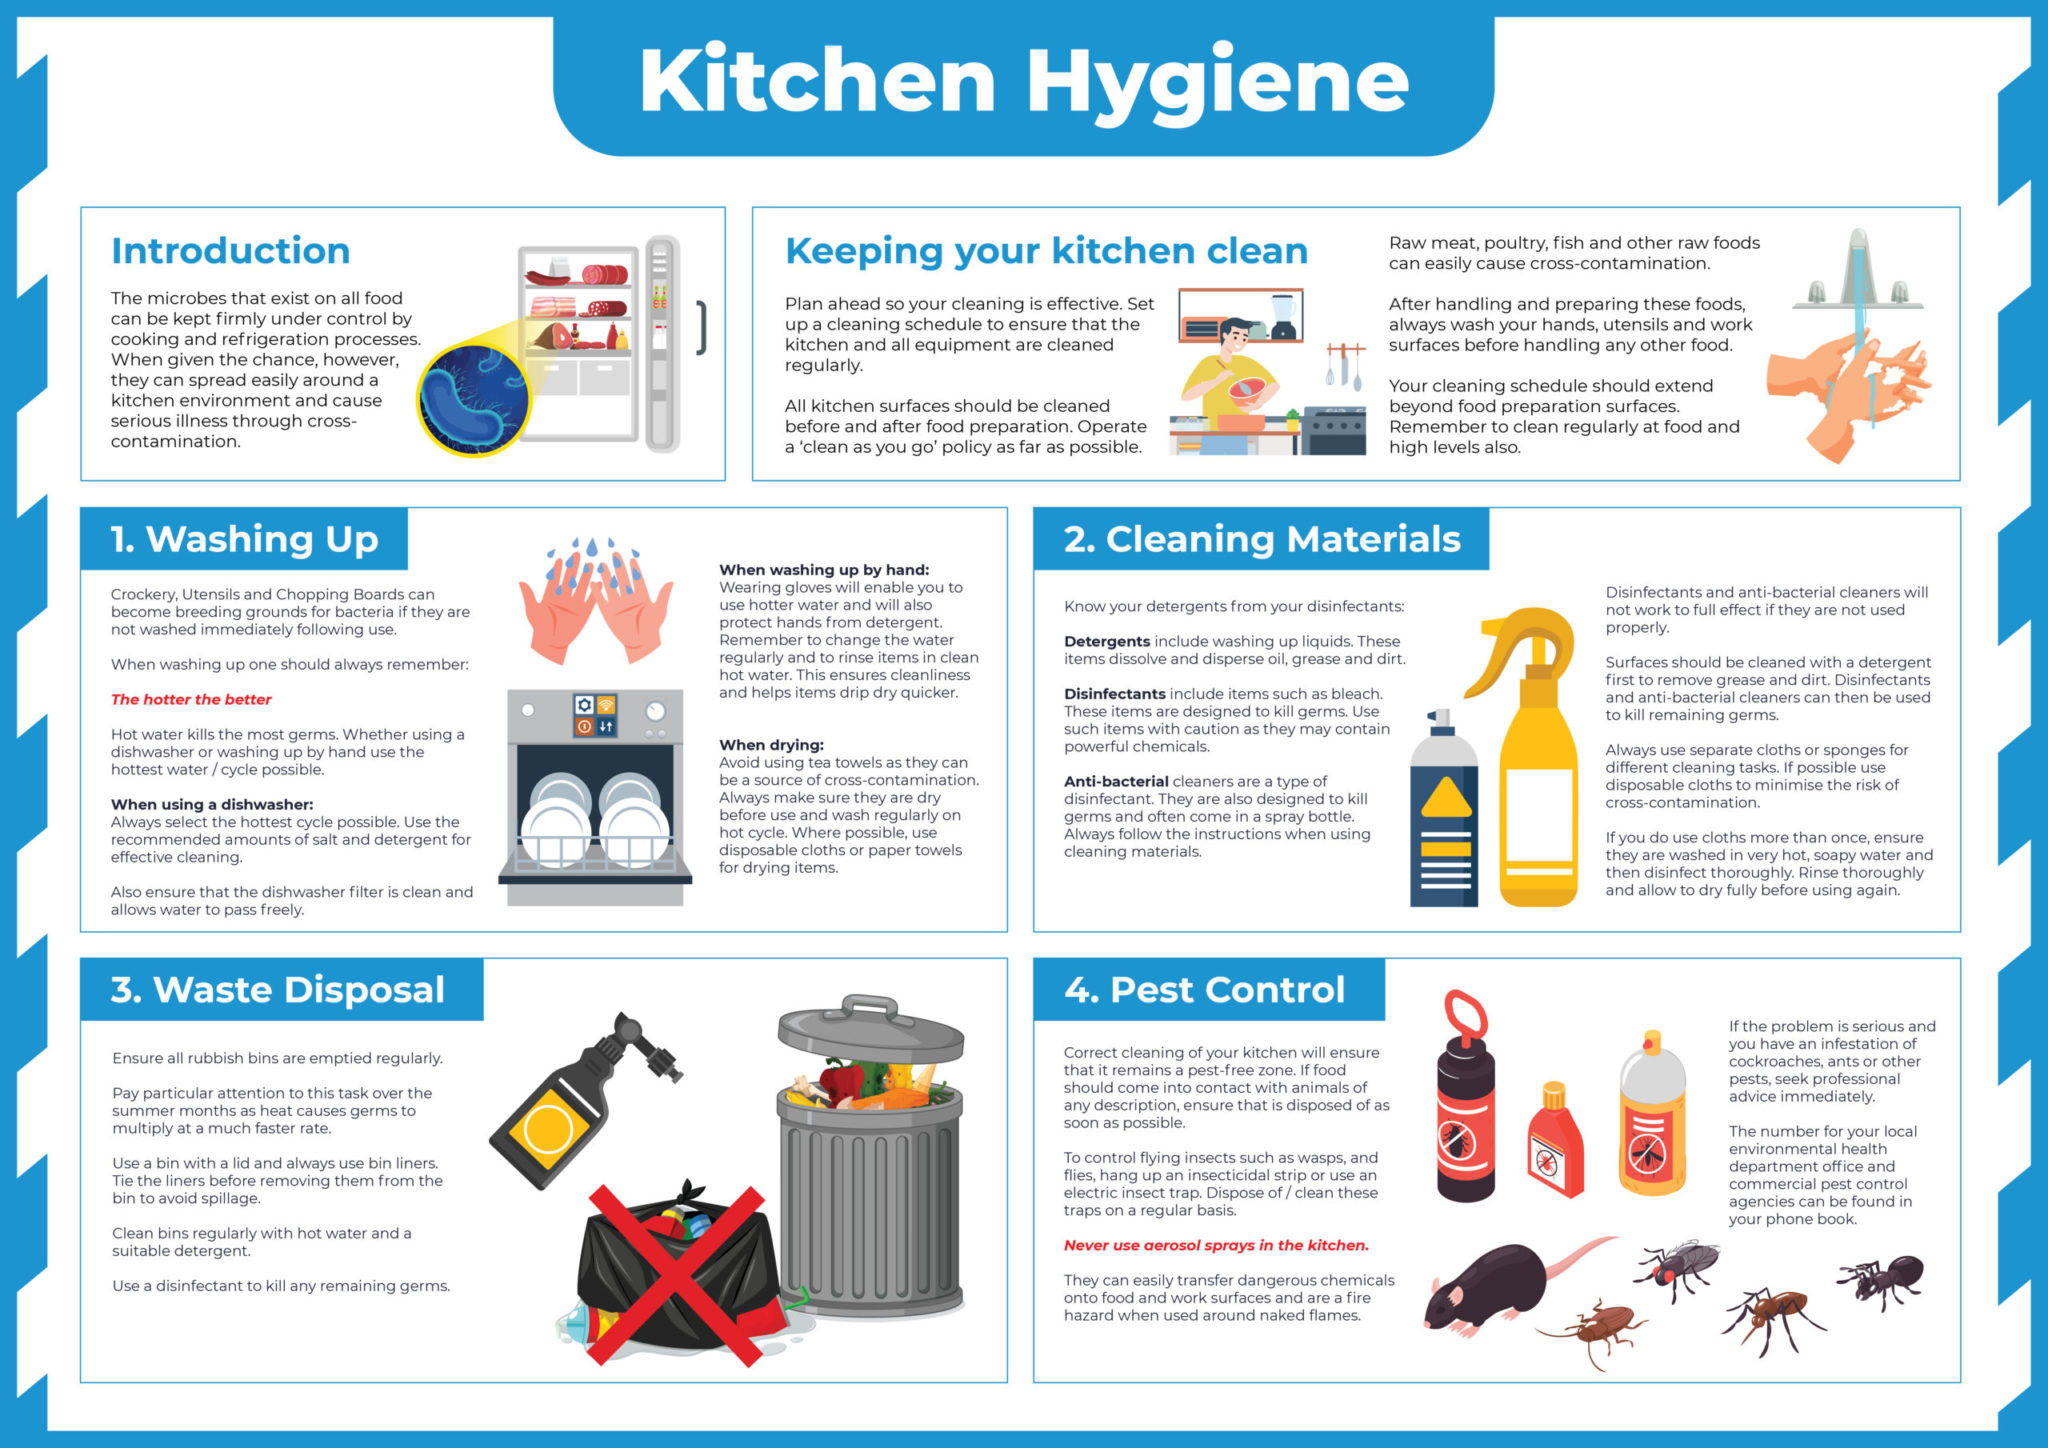 Kitchen Hygiene Safety Poster - Bank2home.com